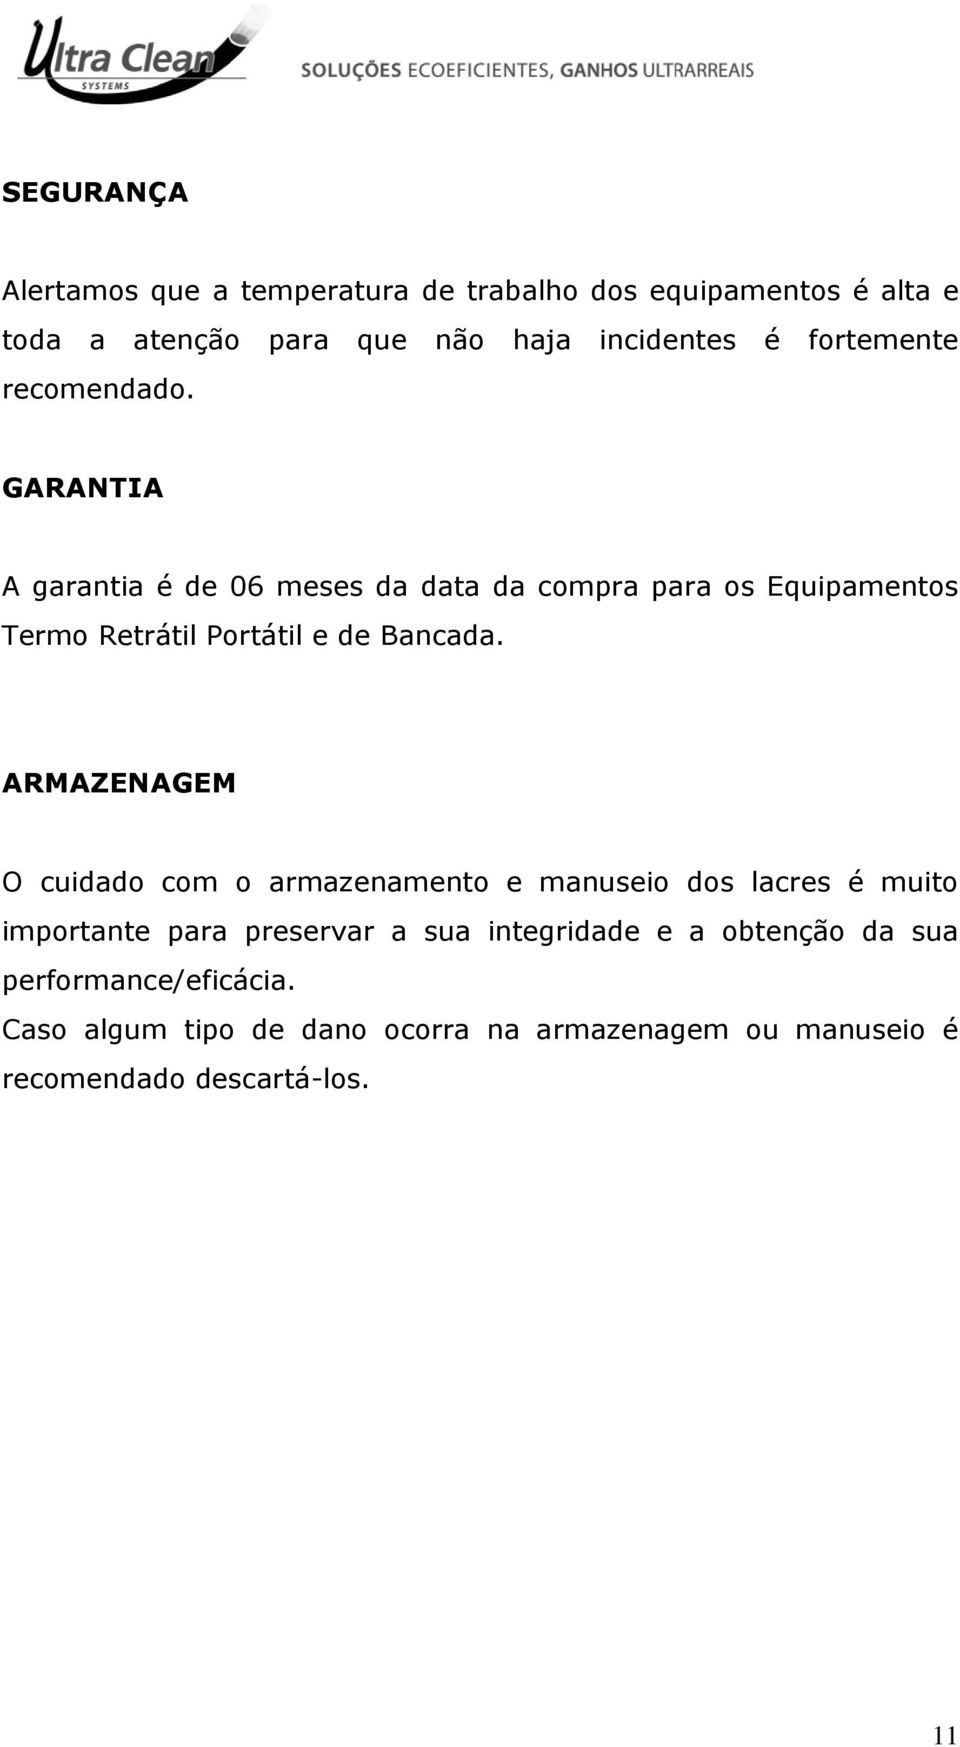 GARANTIA A garantia é de 06 meses da data da compra para os Equipamentos Termo Retrátil Portátil e de Bancada.